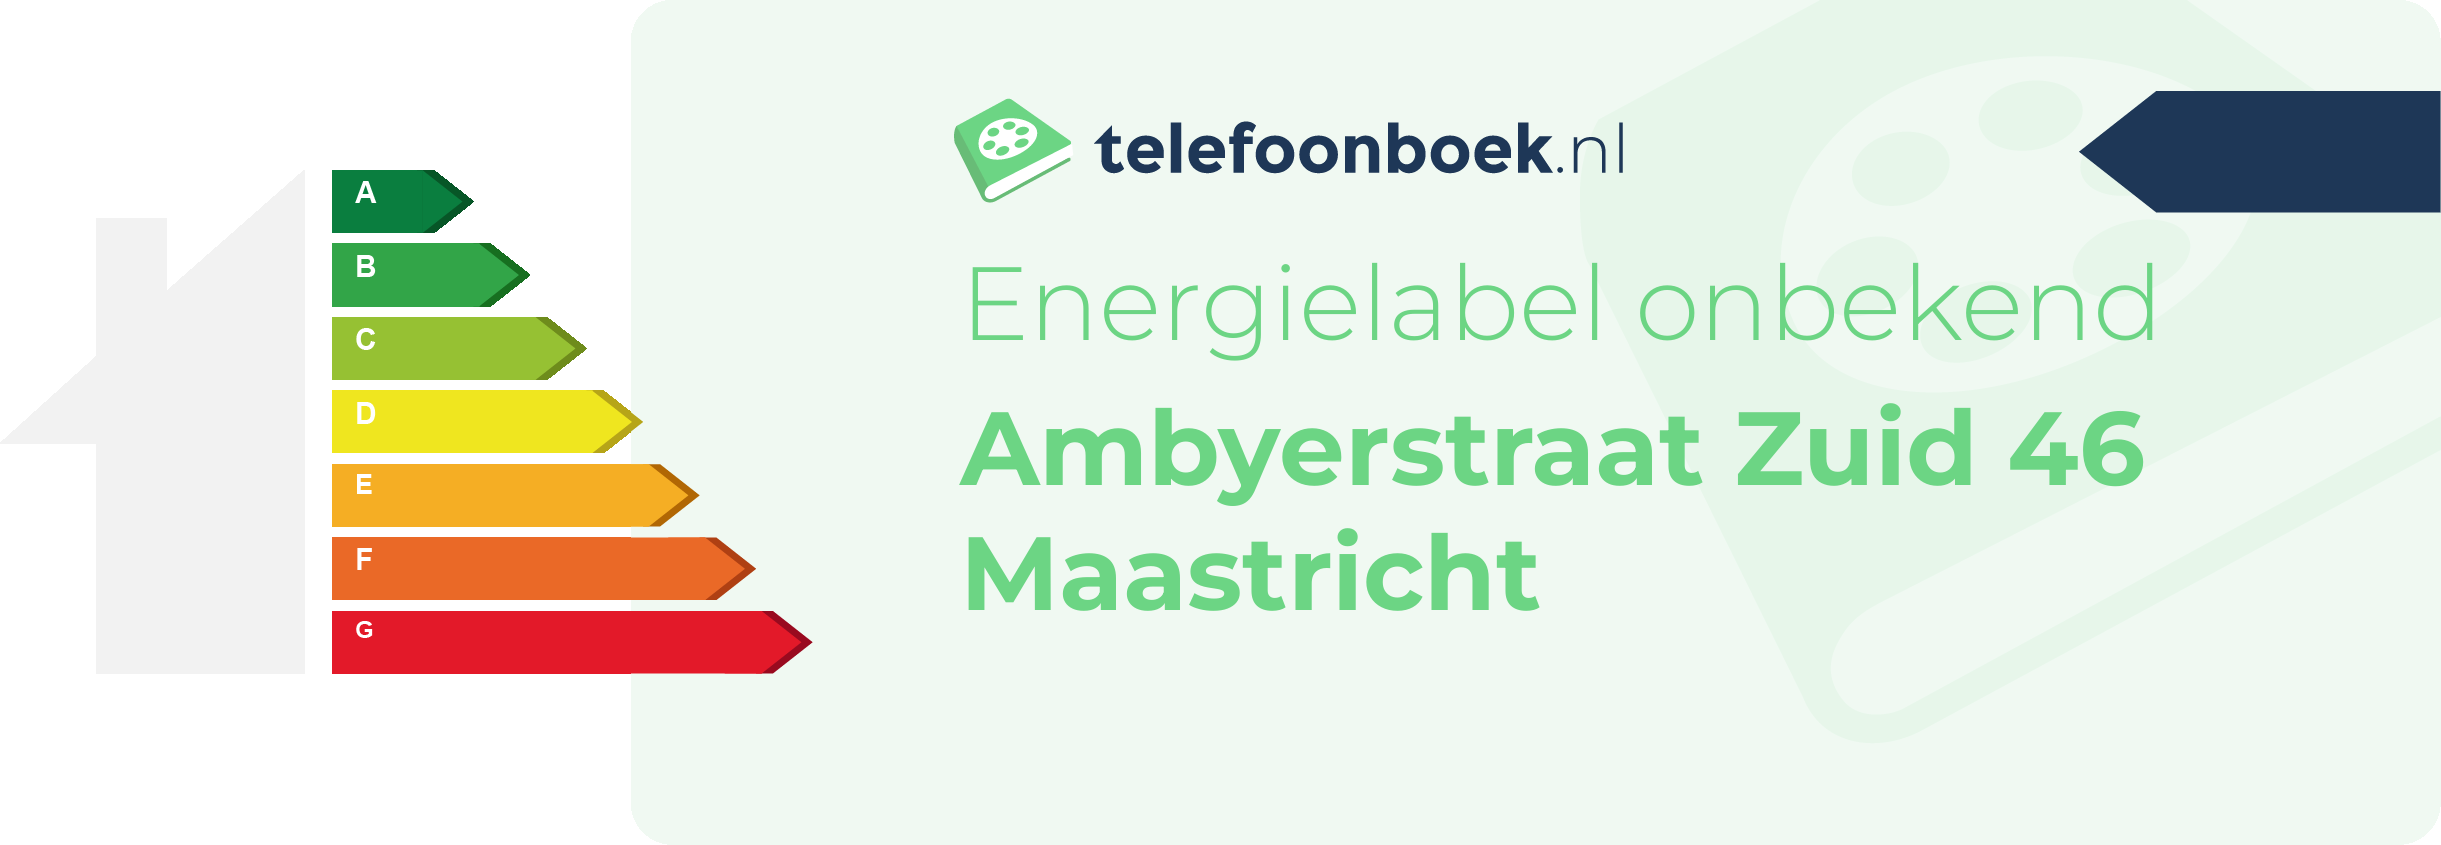 Energielabel Ambyerstraat Zuid 46 Maastricht